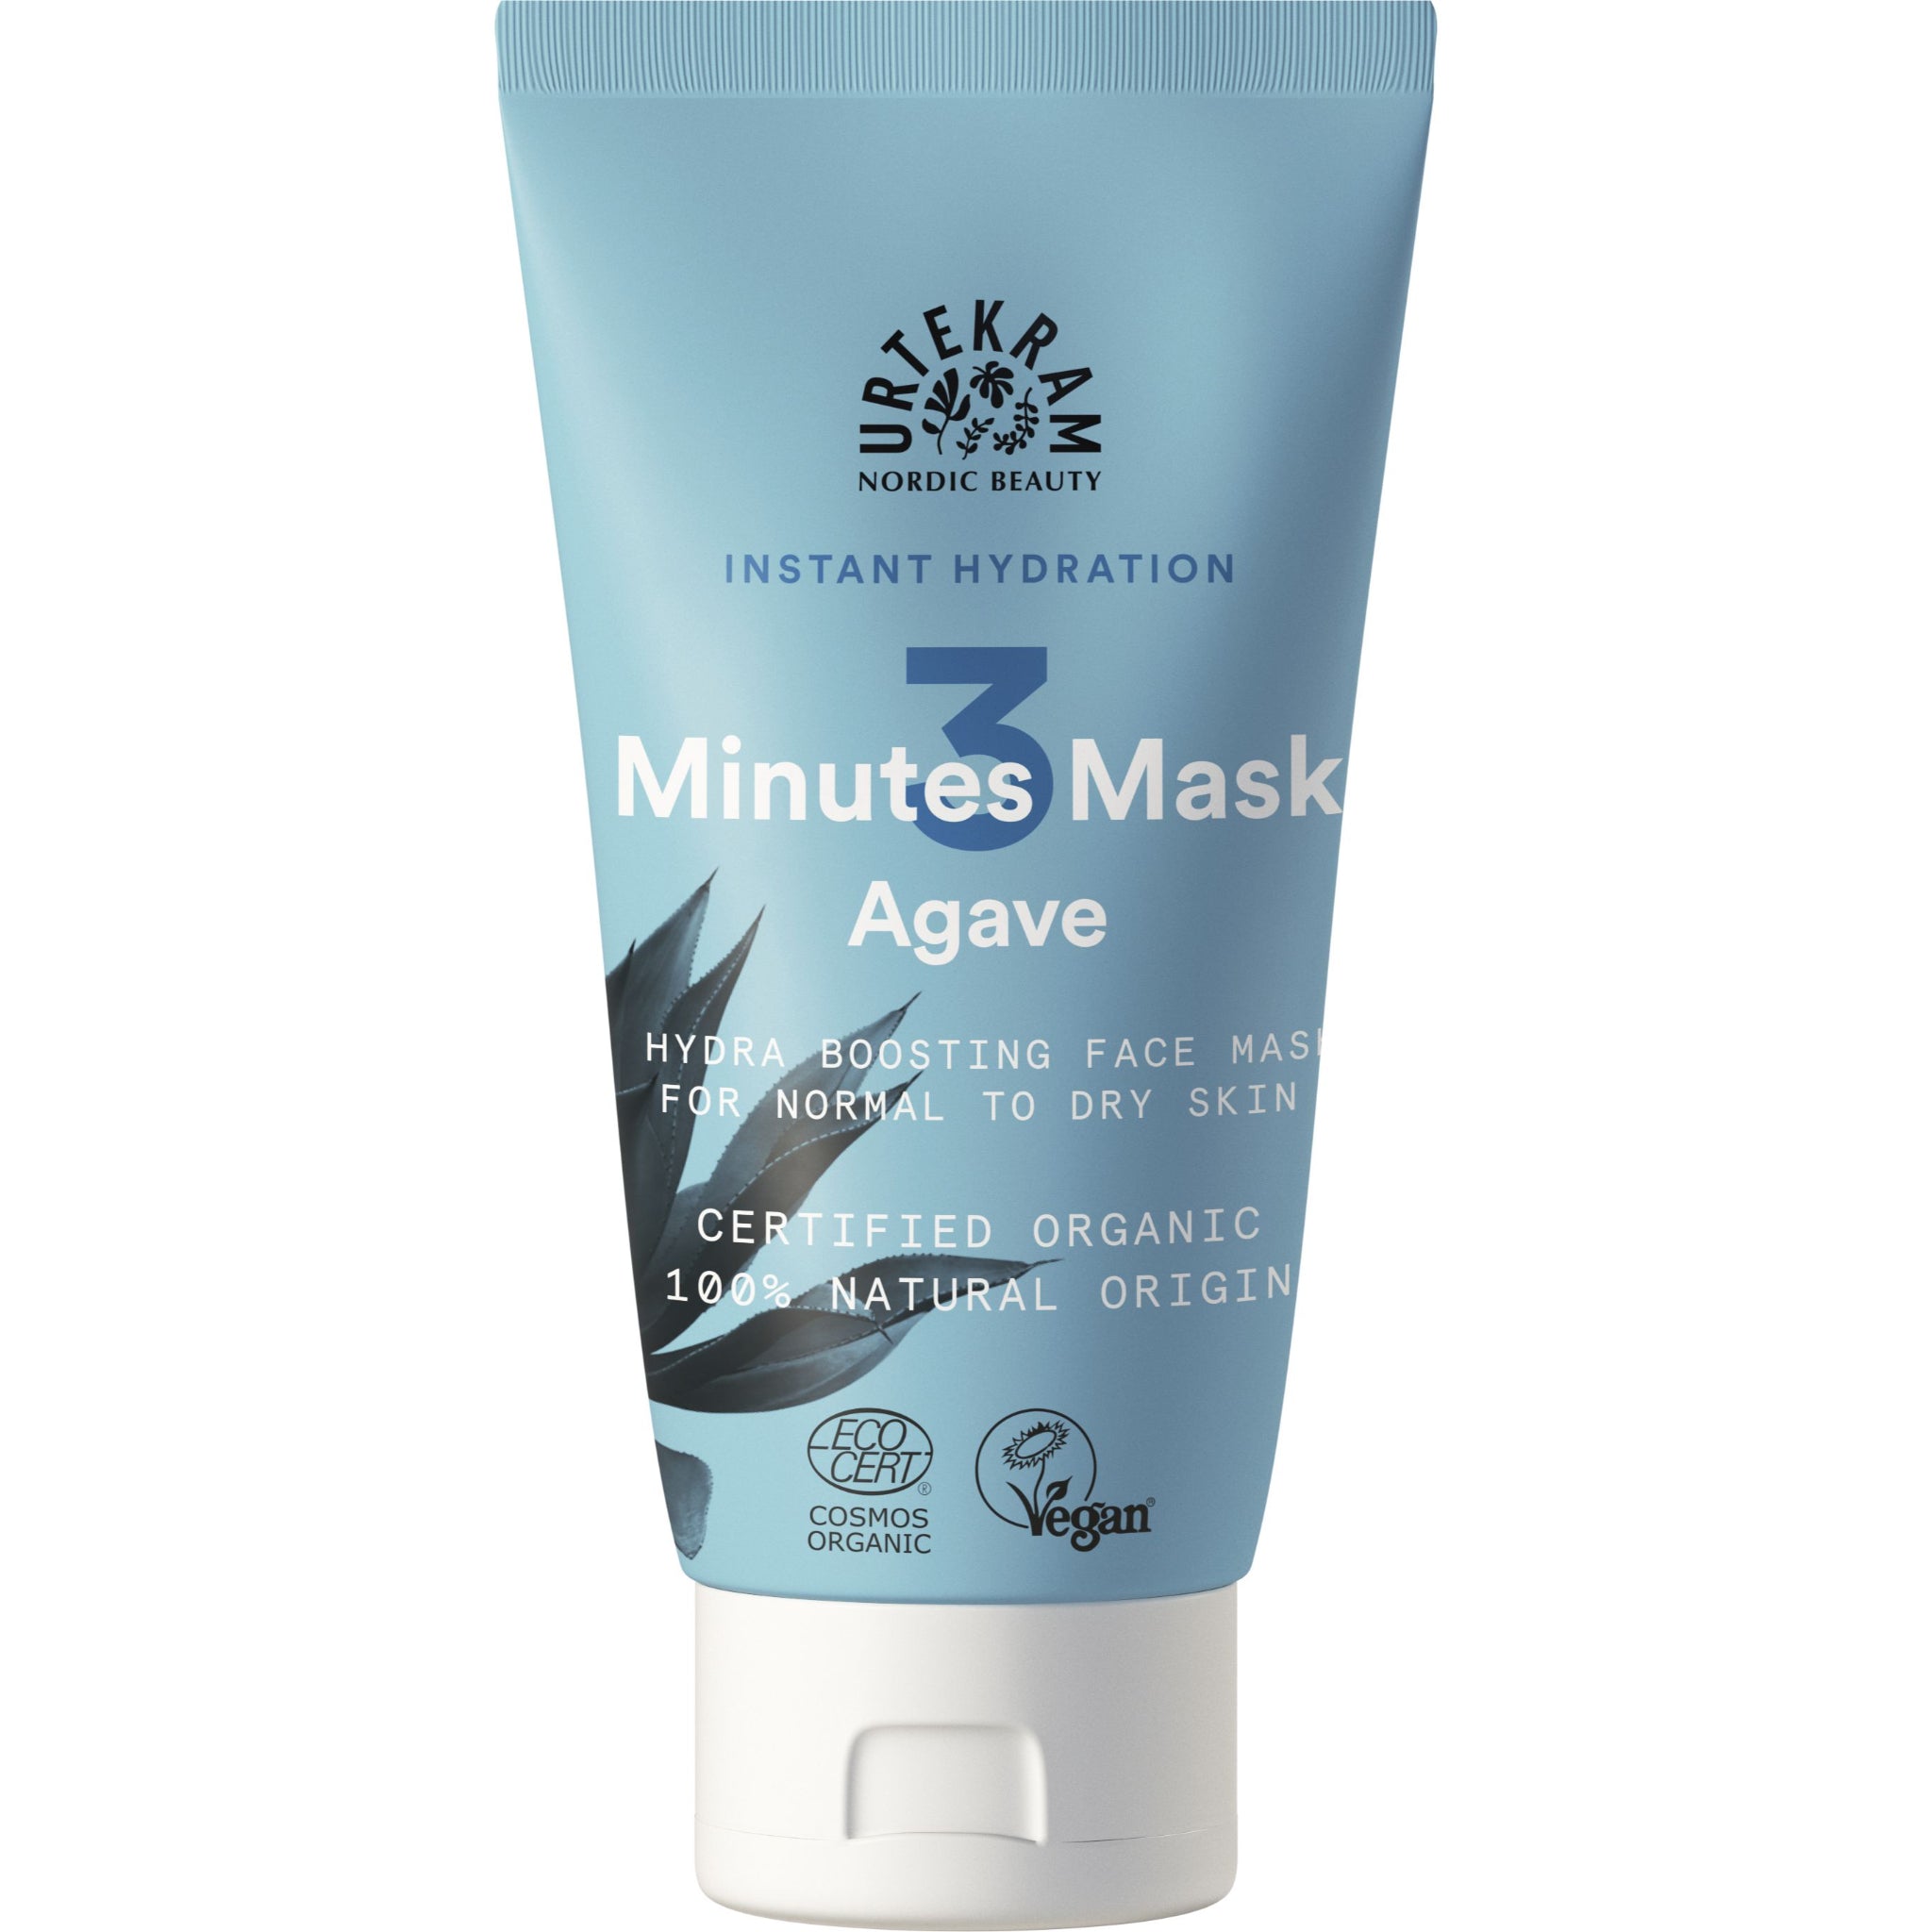 Urtekram Gesichtsmaske "3 Minutes Mask Agave" 75 ml